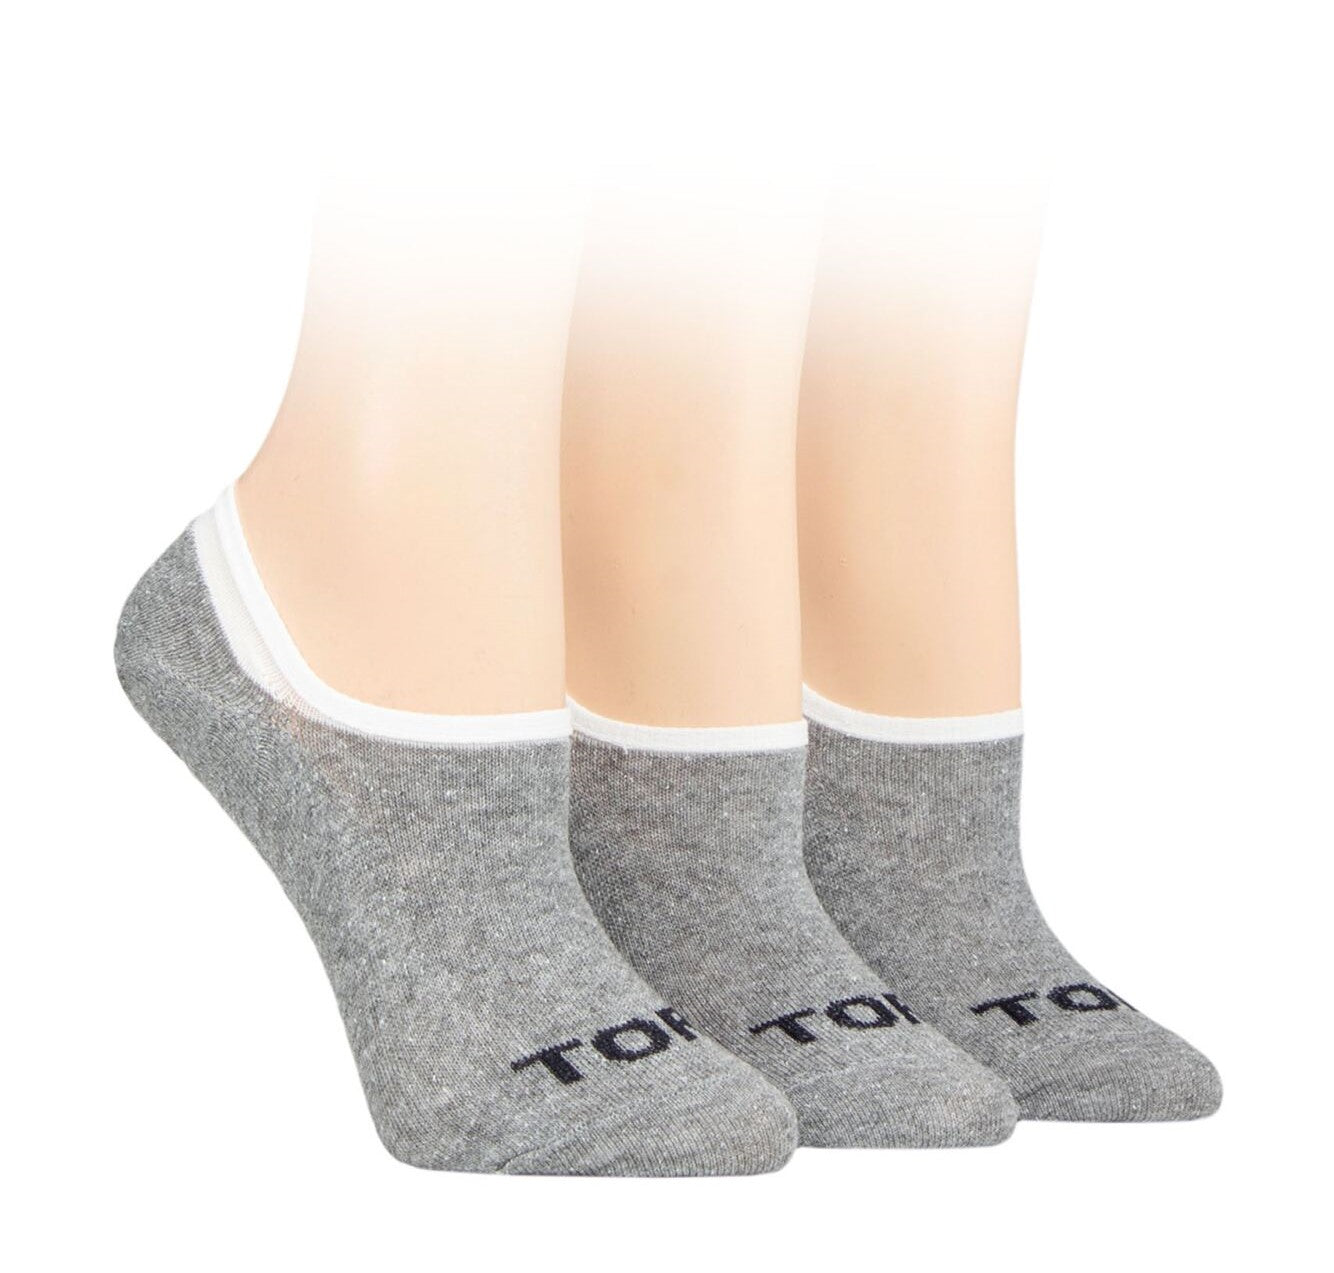 TORE 3PK 100% Recycled Plain Ped "No Show" Socks -Womens 4-8